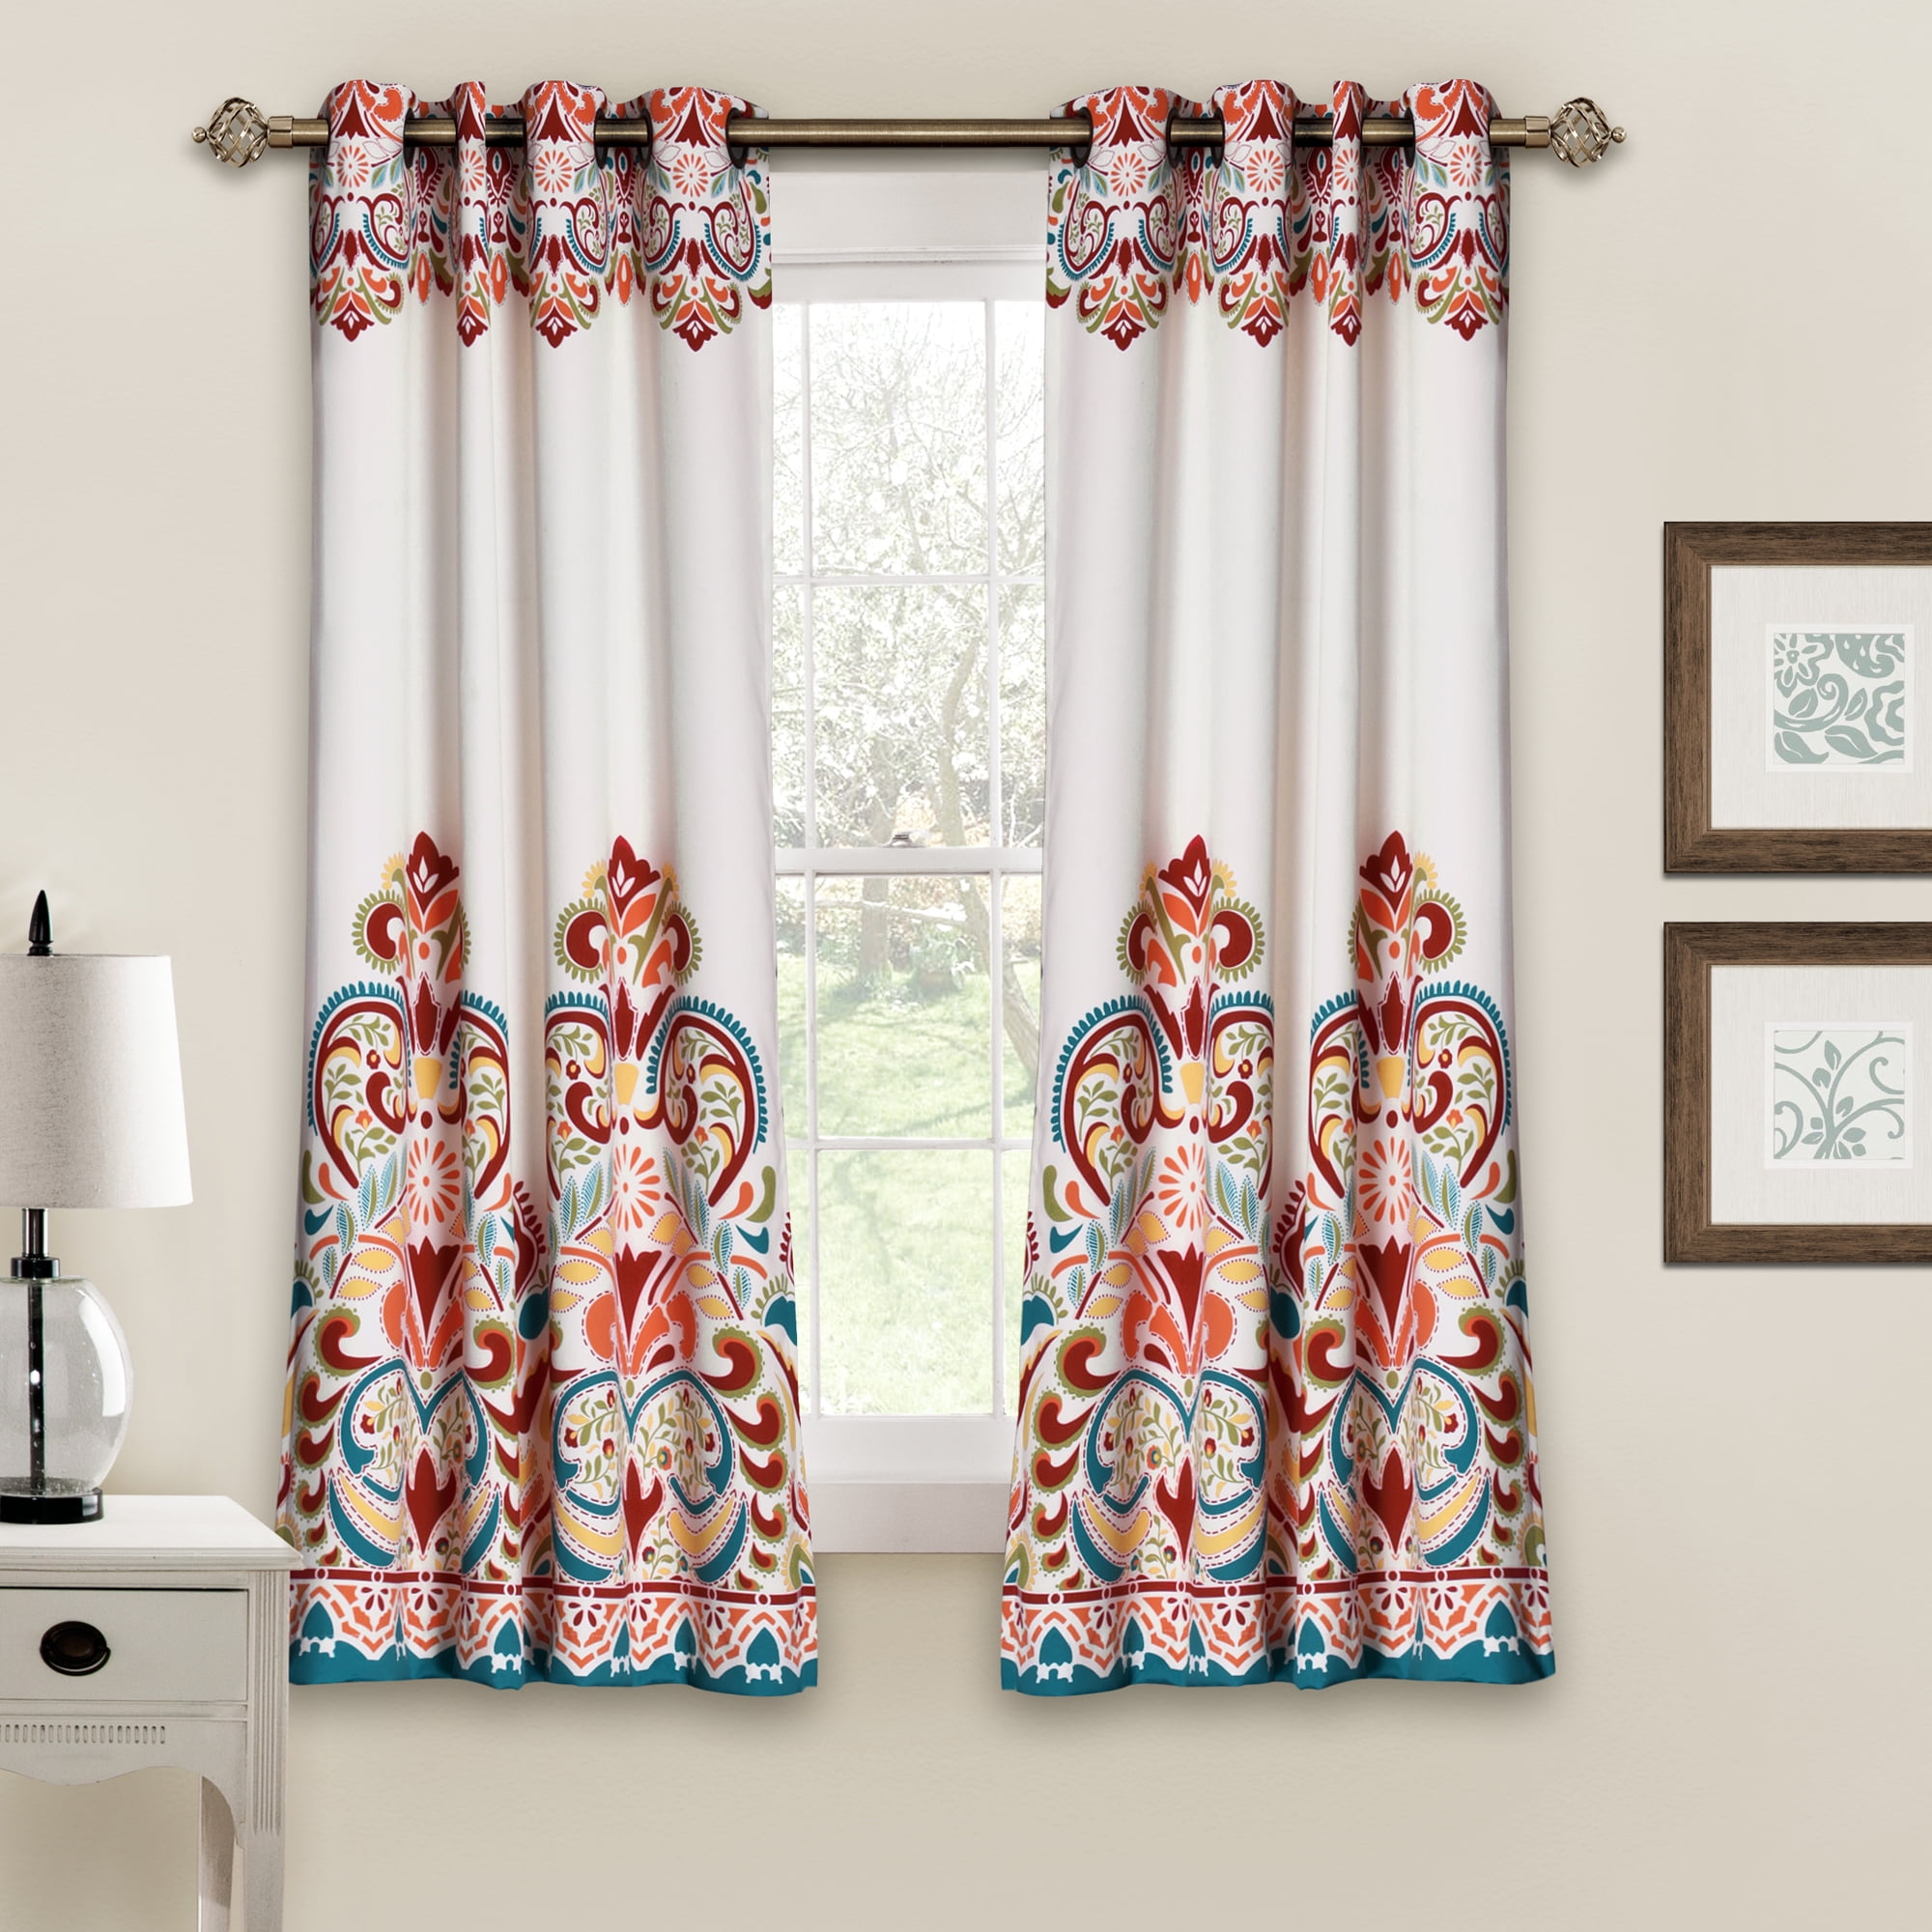 Details about   Boho Curtain Floral Print Living Room Tassel Cotton Linen Curtains Window Drapes 